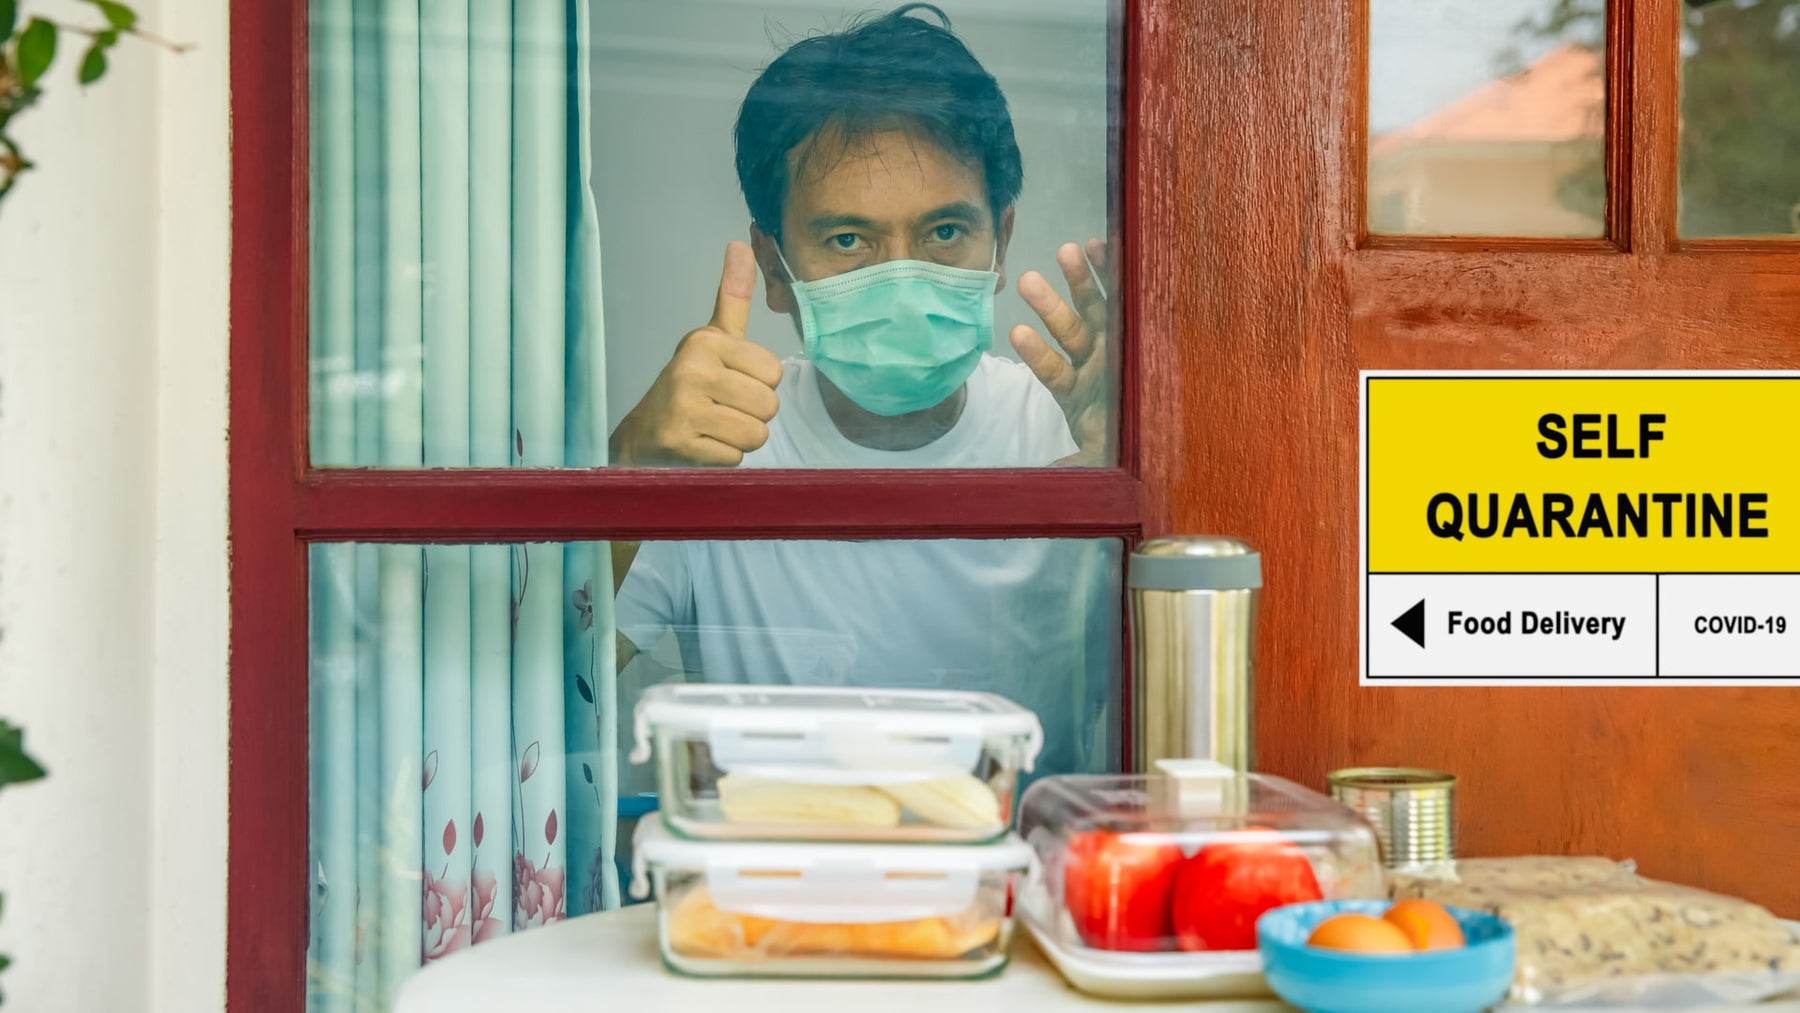 Foods & Nutrition: Tips for Self Quarantine